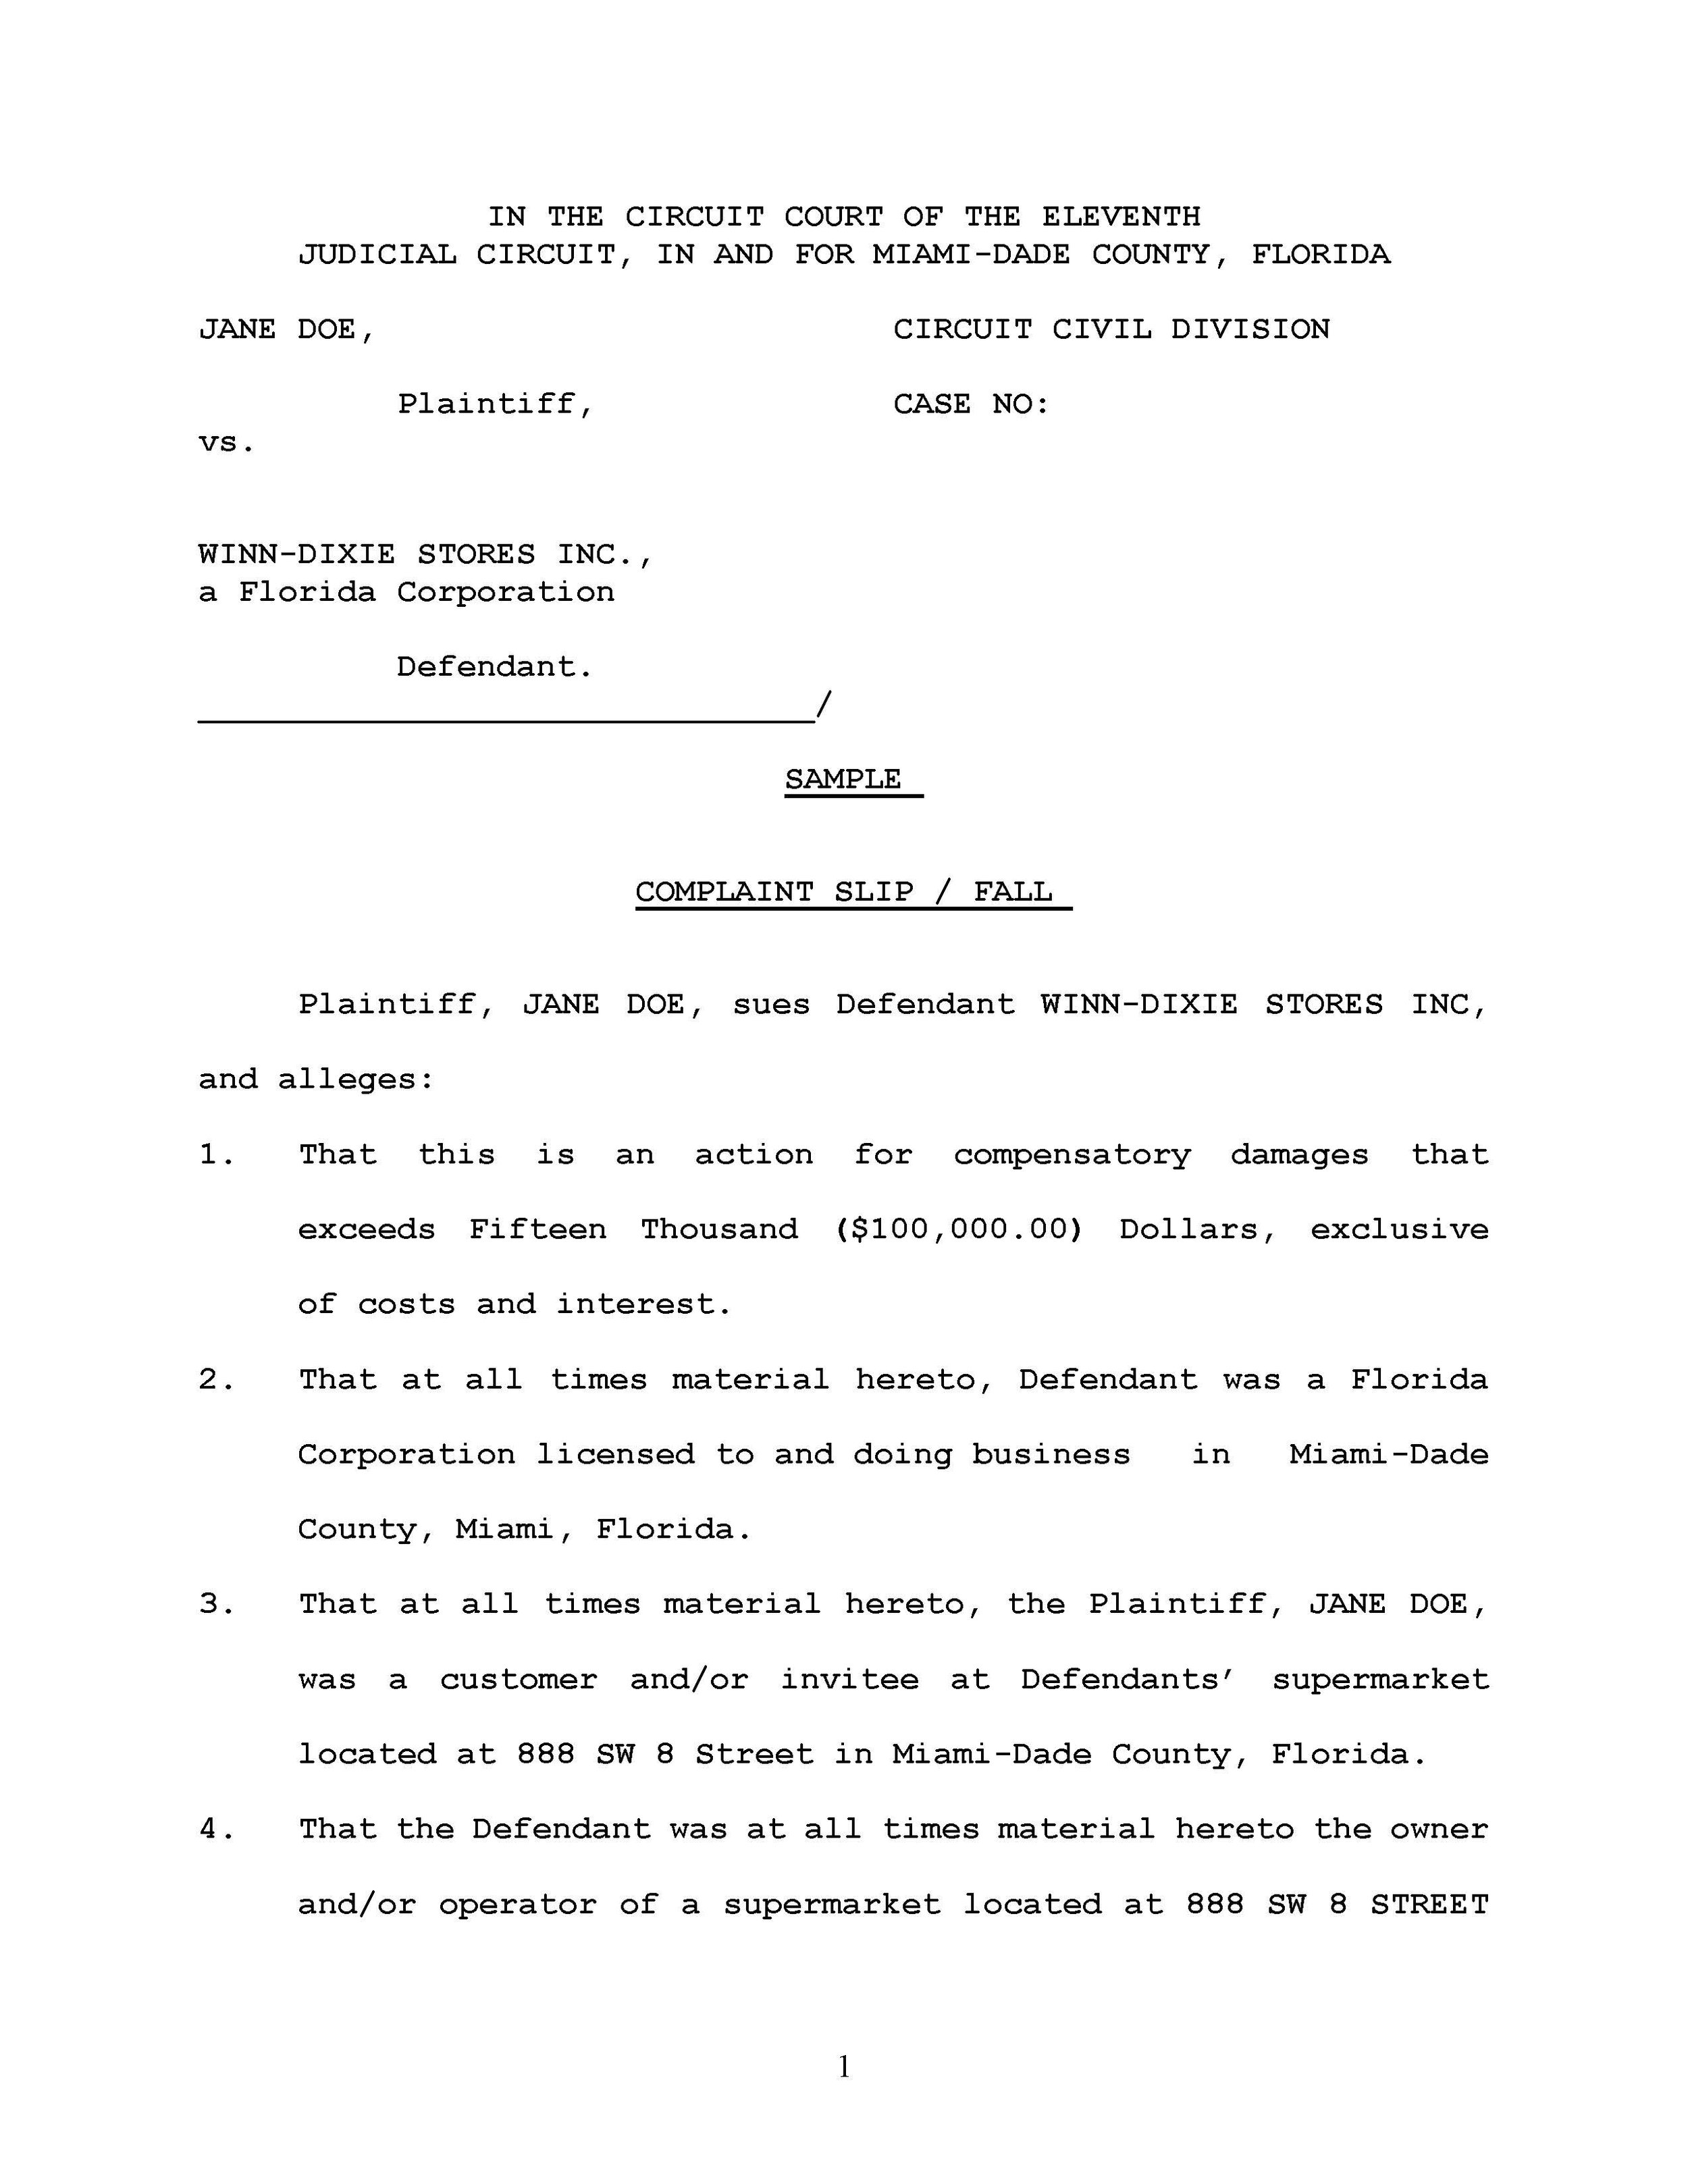 Kreutzer-Law-Attorney-Miami-Lawyers-Complaint Slip  Fall_Page_1.jpg